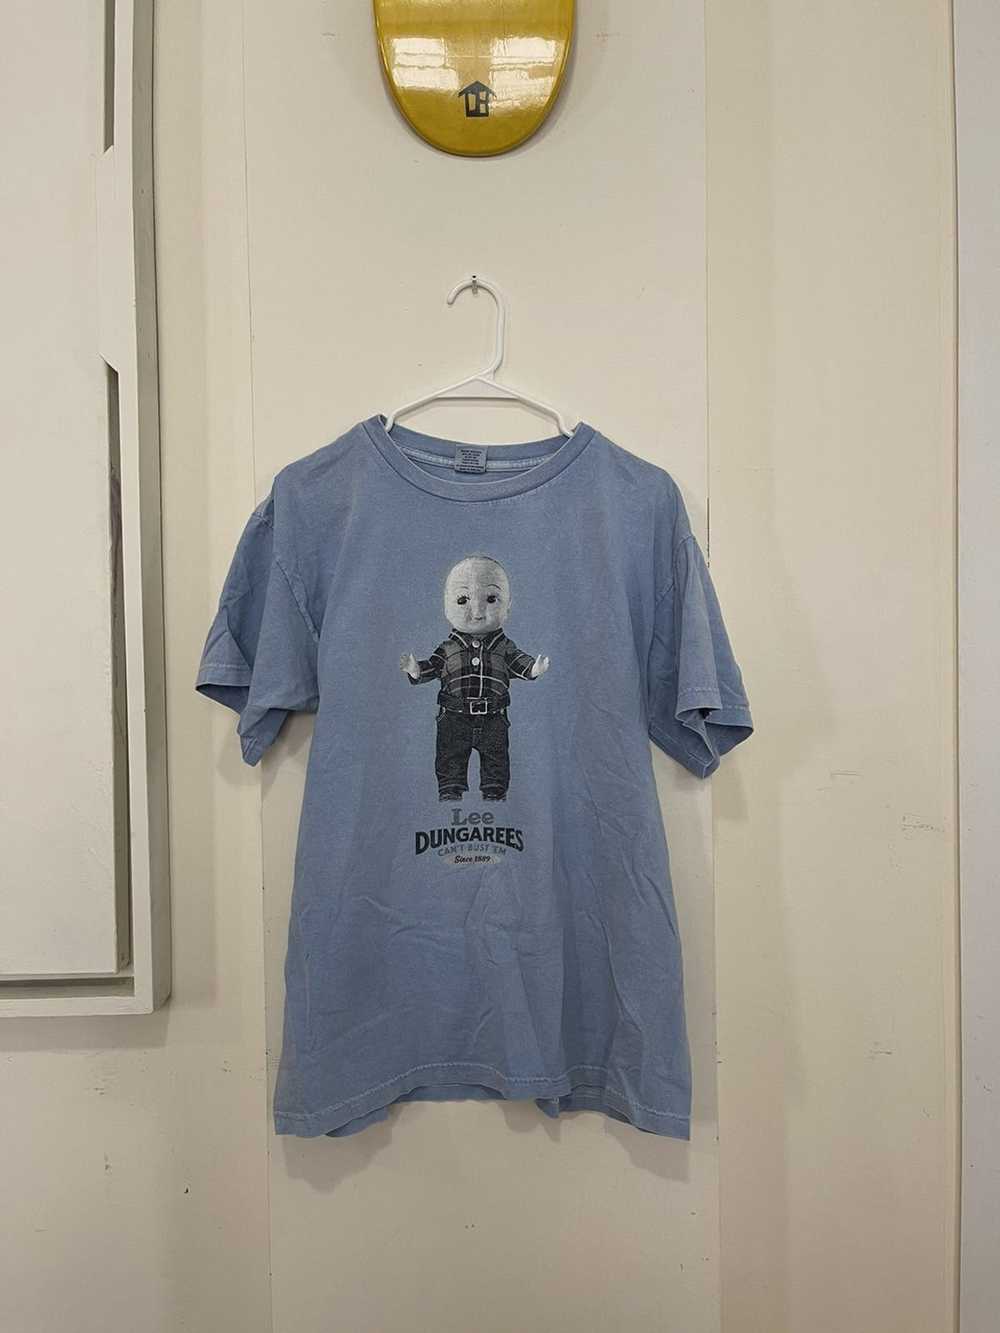 Vintage Lee Dungarees doll T-shirt - image 1